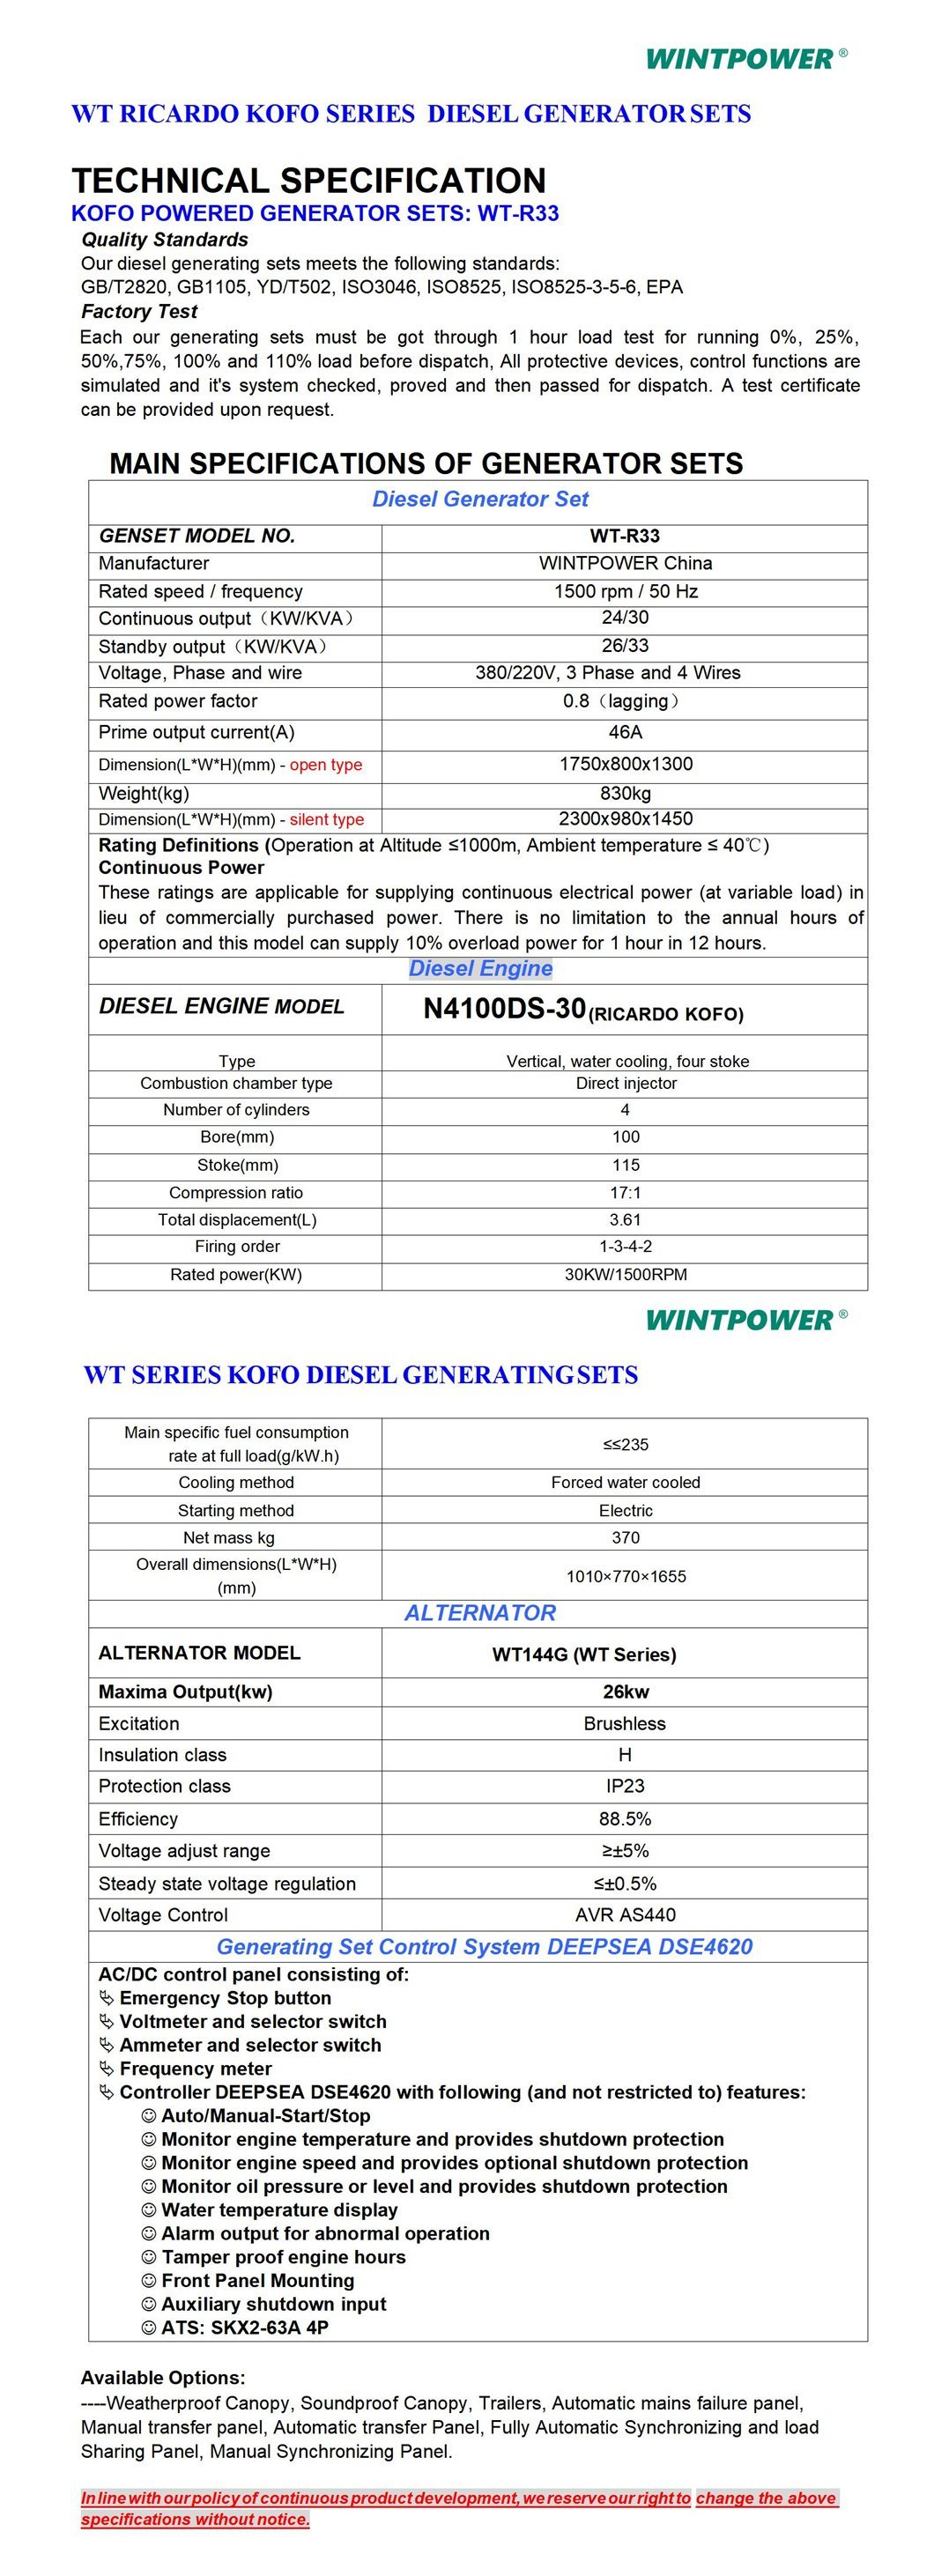 Weichai Kofo Ricardo Motor Diesel Grupo electrógeno Dg Genset 500kVA Wt13A-390de Tipo silencioso insonorizado 400/230V 380/220V 208/110V 440V 480V 600V 50Hz 60Hz